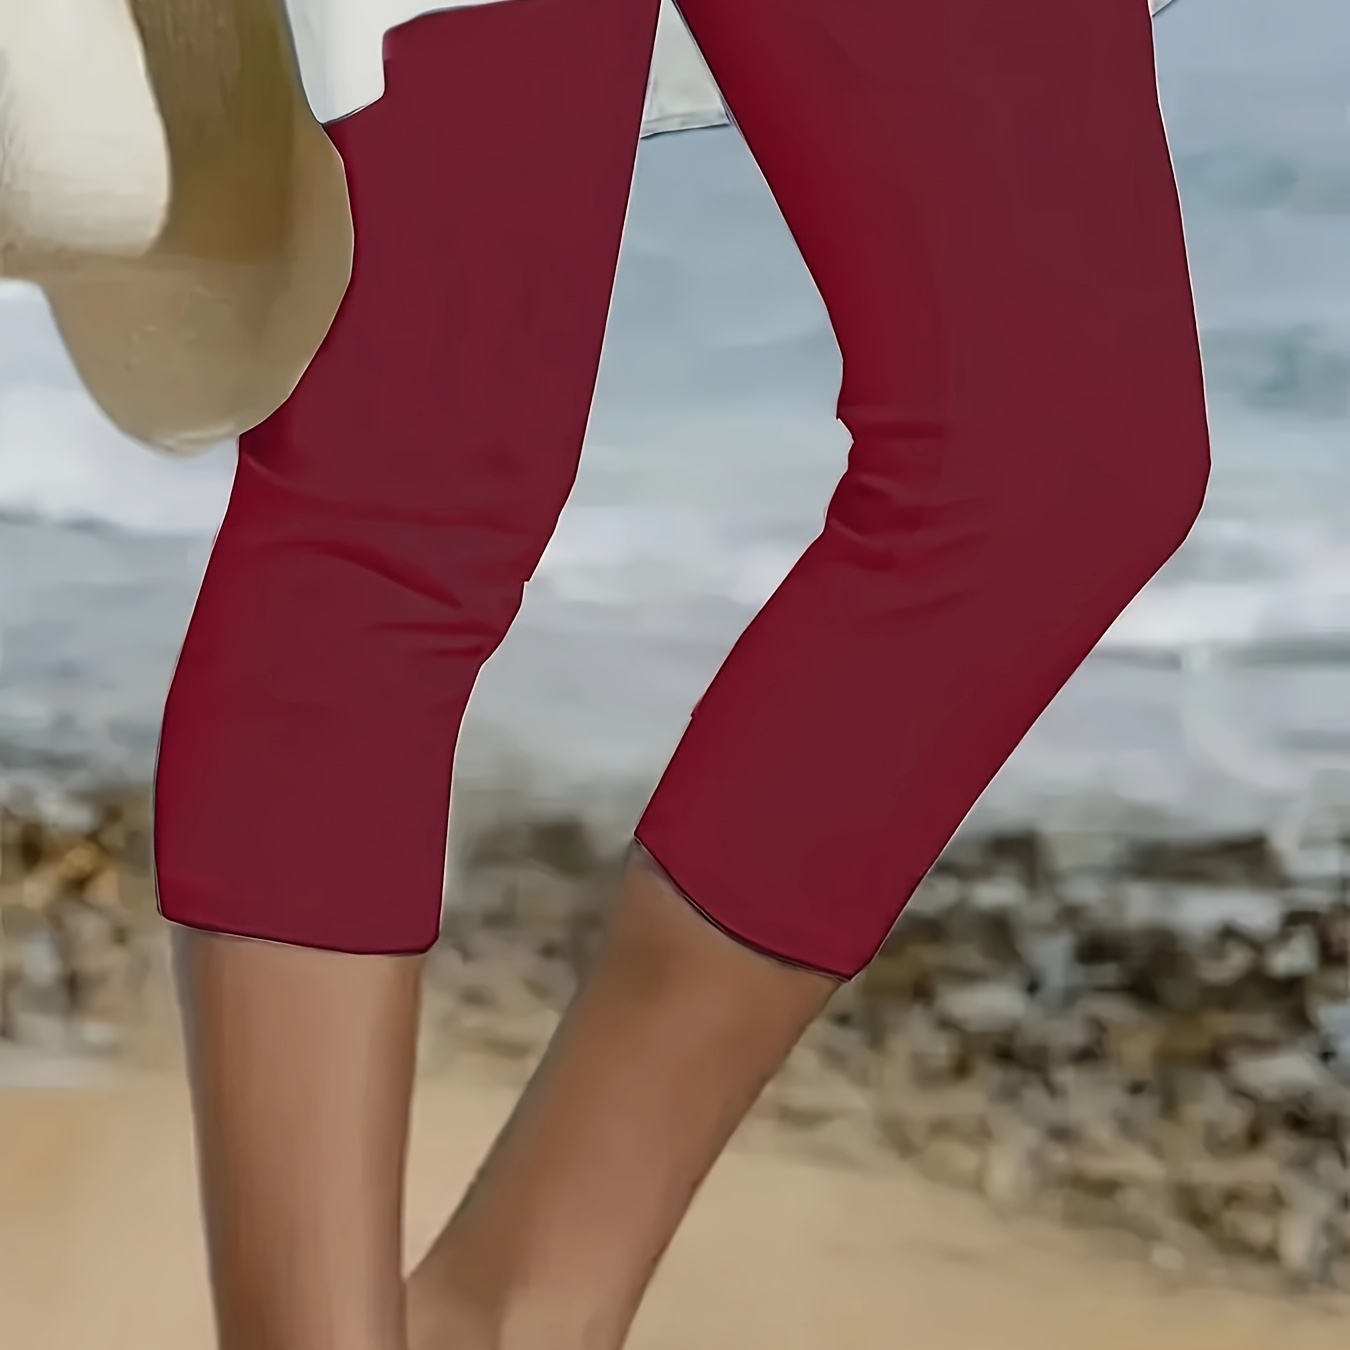 

Women's Solid Color Capri Leggings, Stretchy Yoga Pants, Mid-calf Length, Casual Athletic Wear, Elastic Running Sportswear